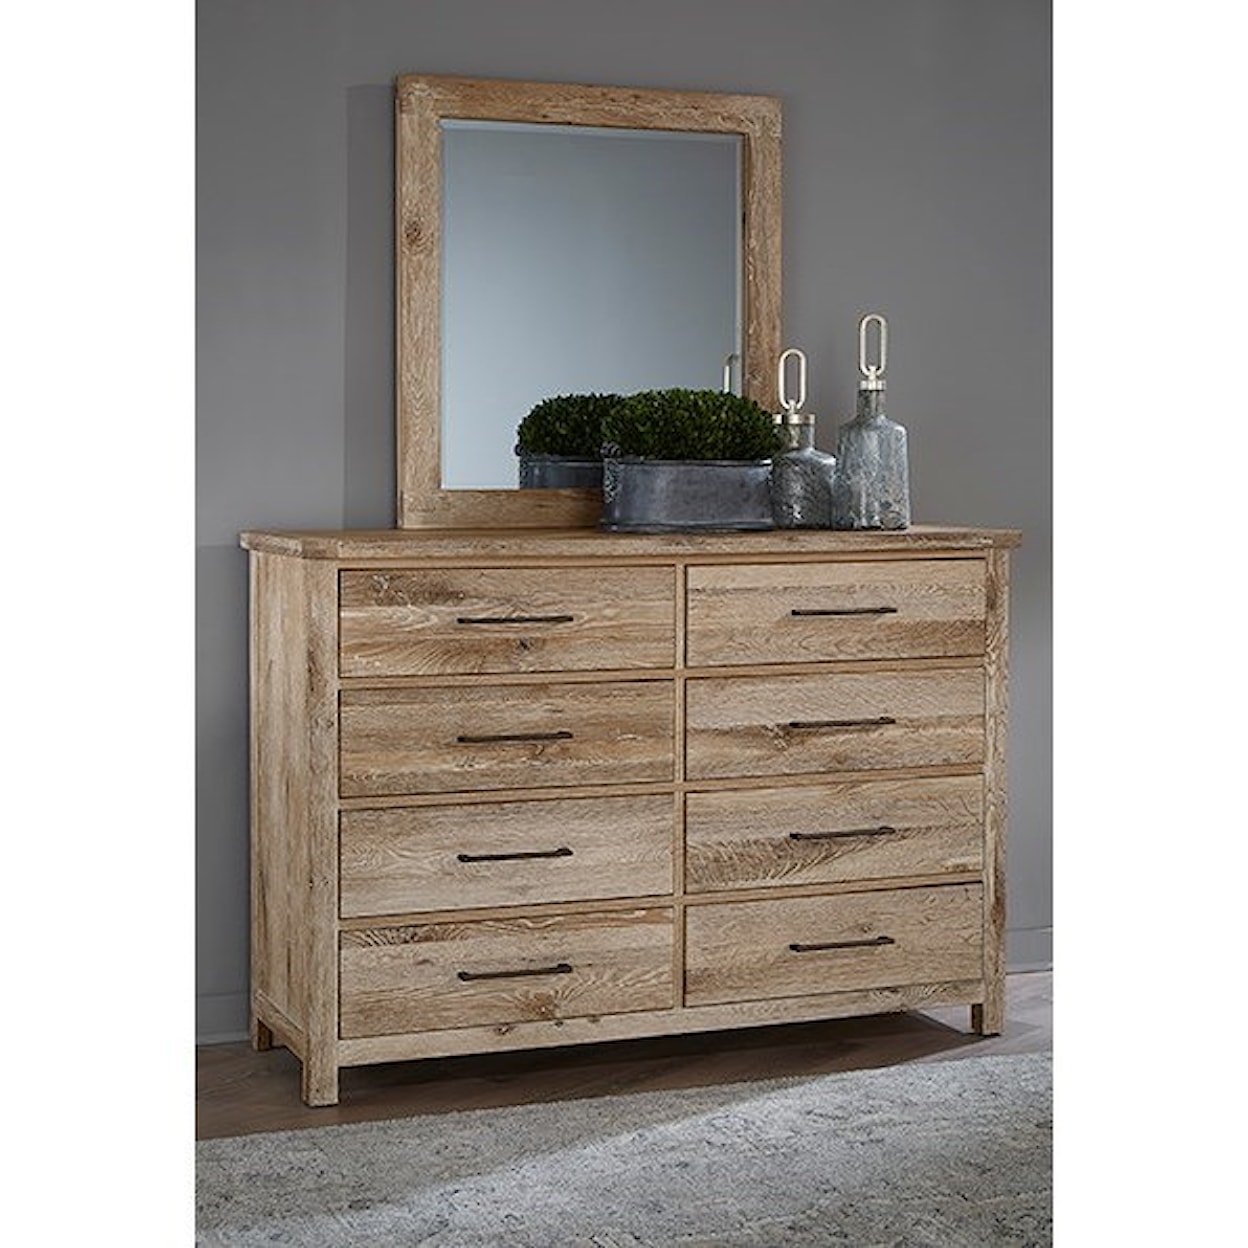 Vaughan Bassett Dovetail - 751 Dresser and Mirror Set